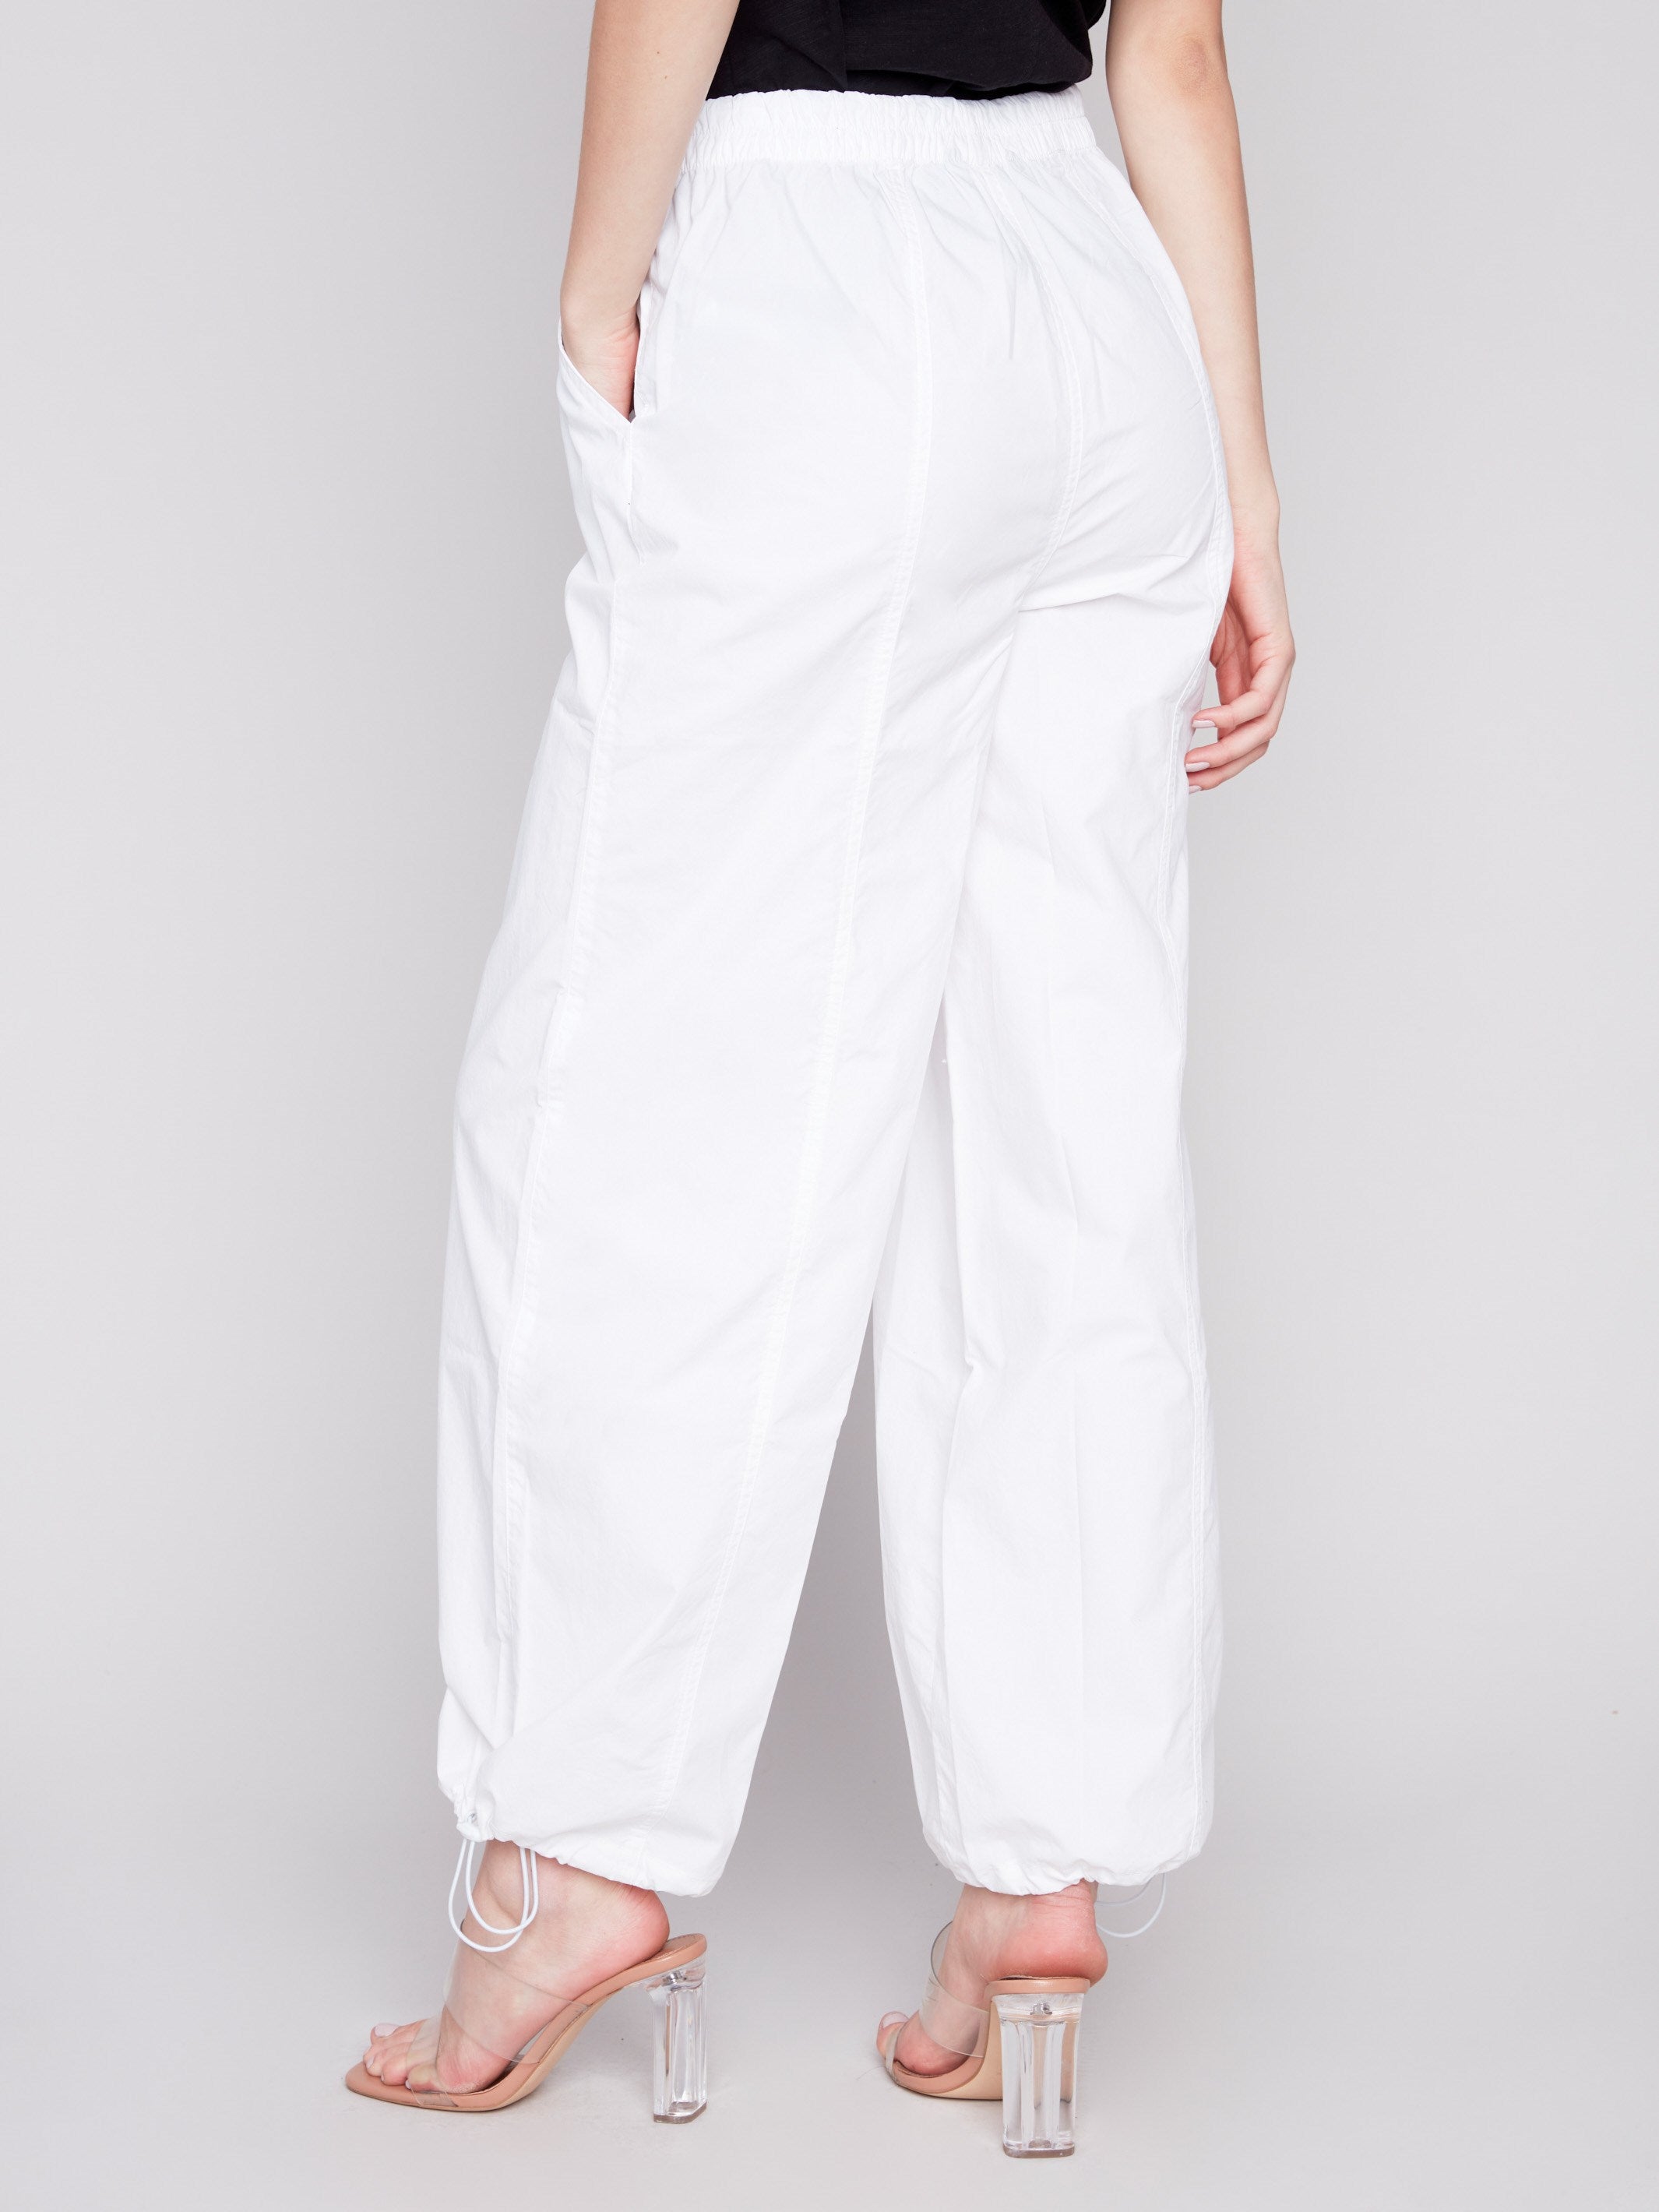 Cotton Parachute Pants - White - Charlie B Collection Canada - Image 3